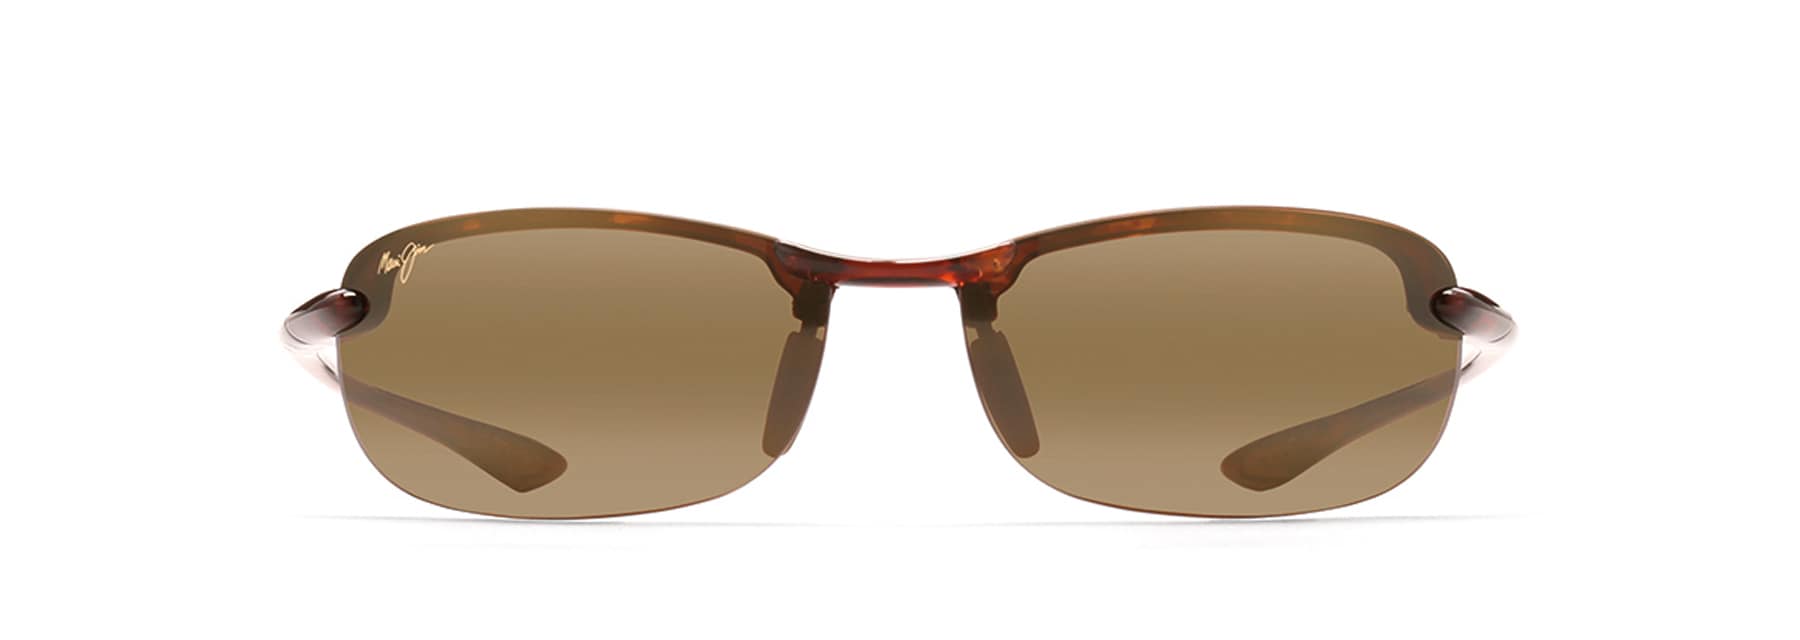 Asian Fit Sunglasses | Maui Jim®